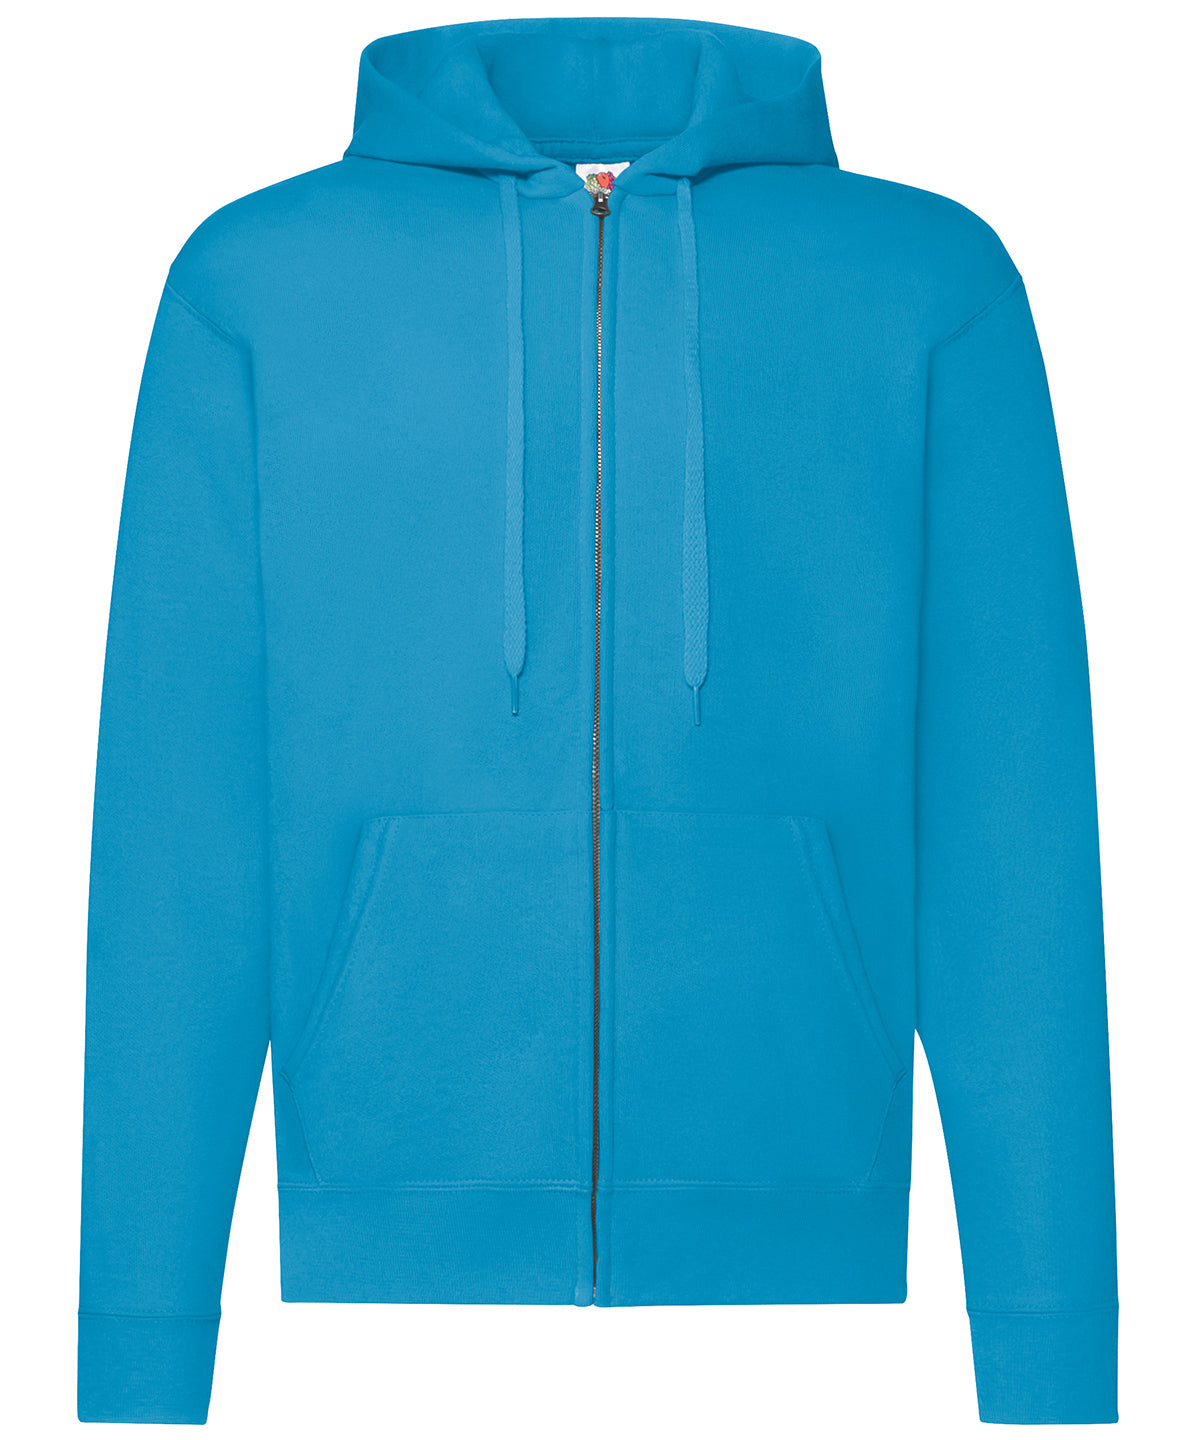 Personalised Hoodies - Mid Blue Fruit of the Loom Classic 80/20 hooded sweatshirt jacket